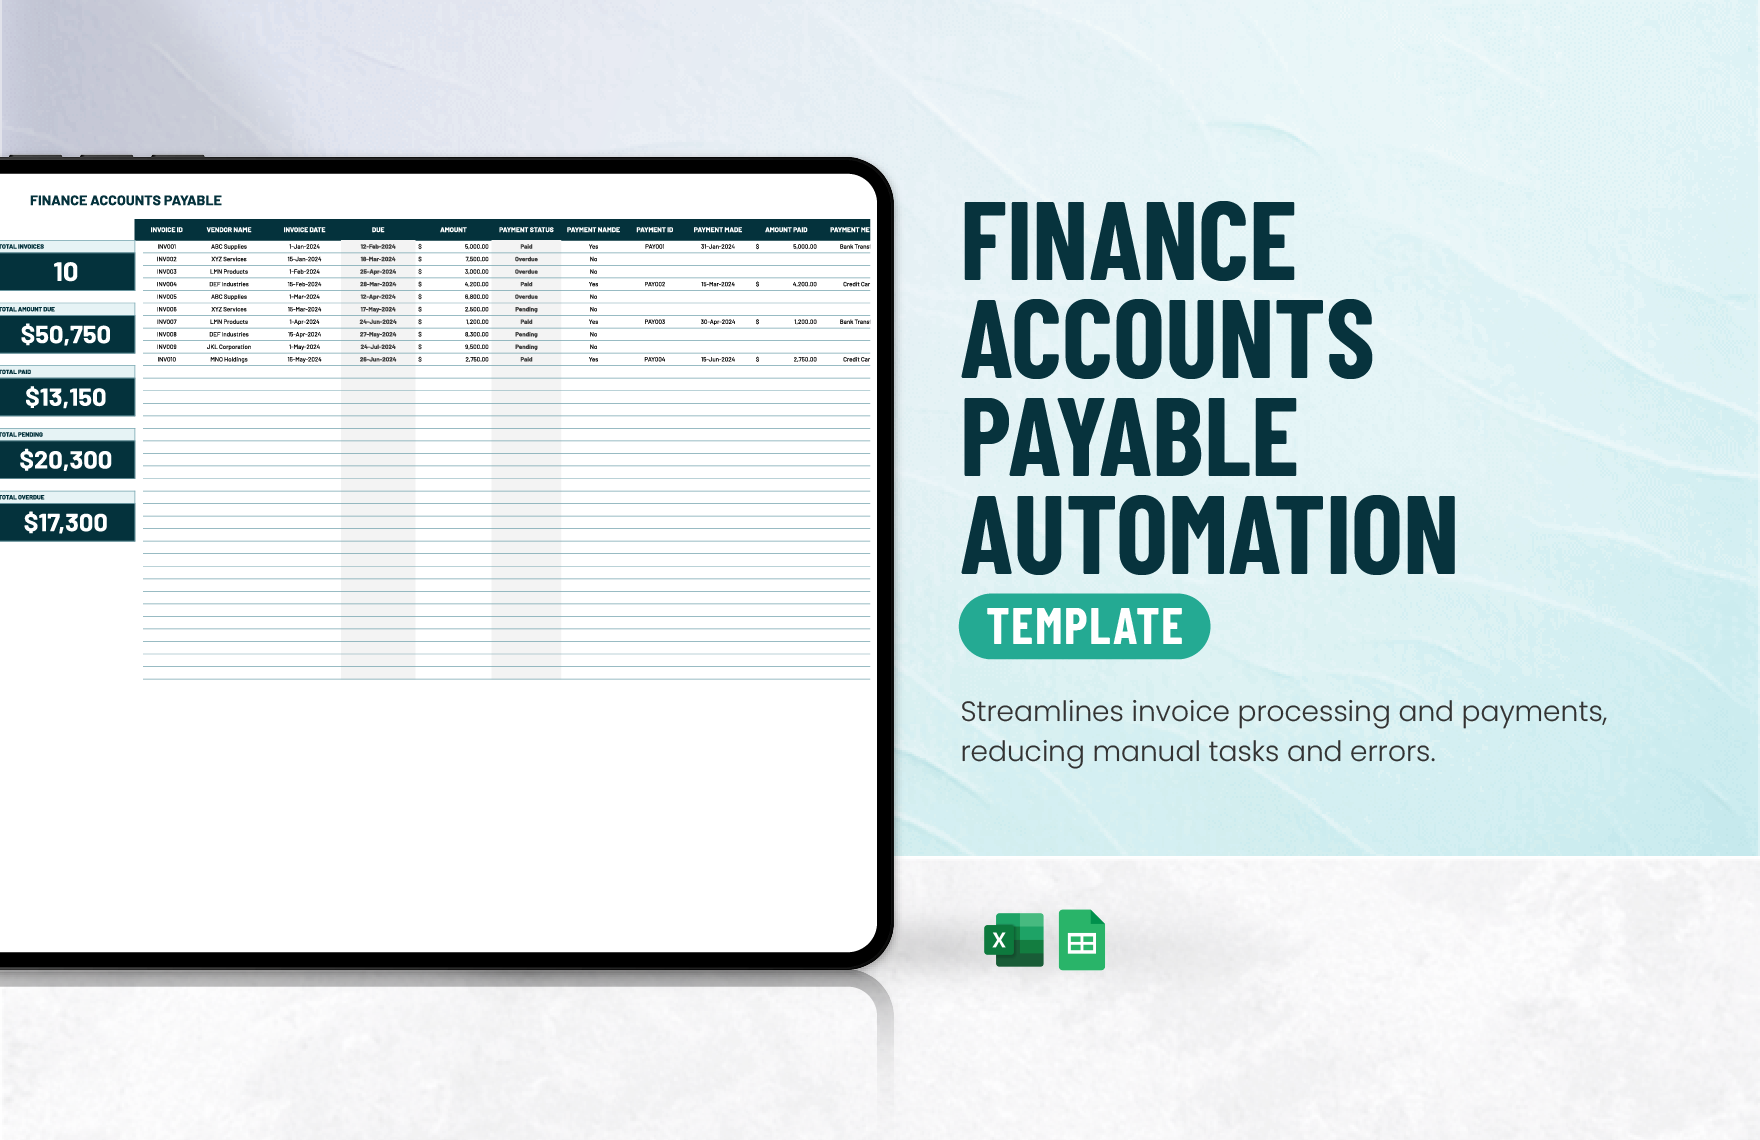 Finance Accounts Payable Automation Template